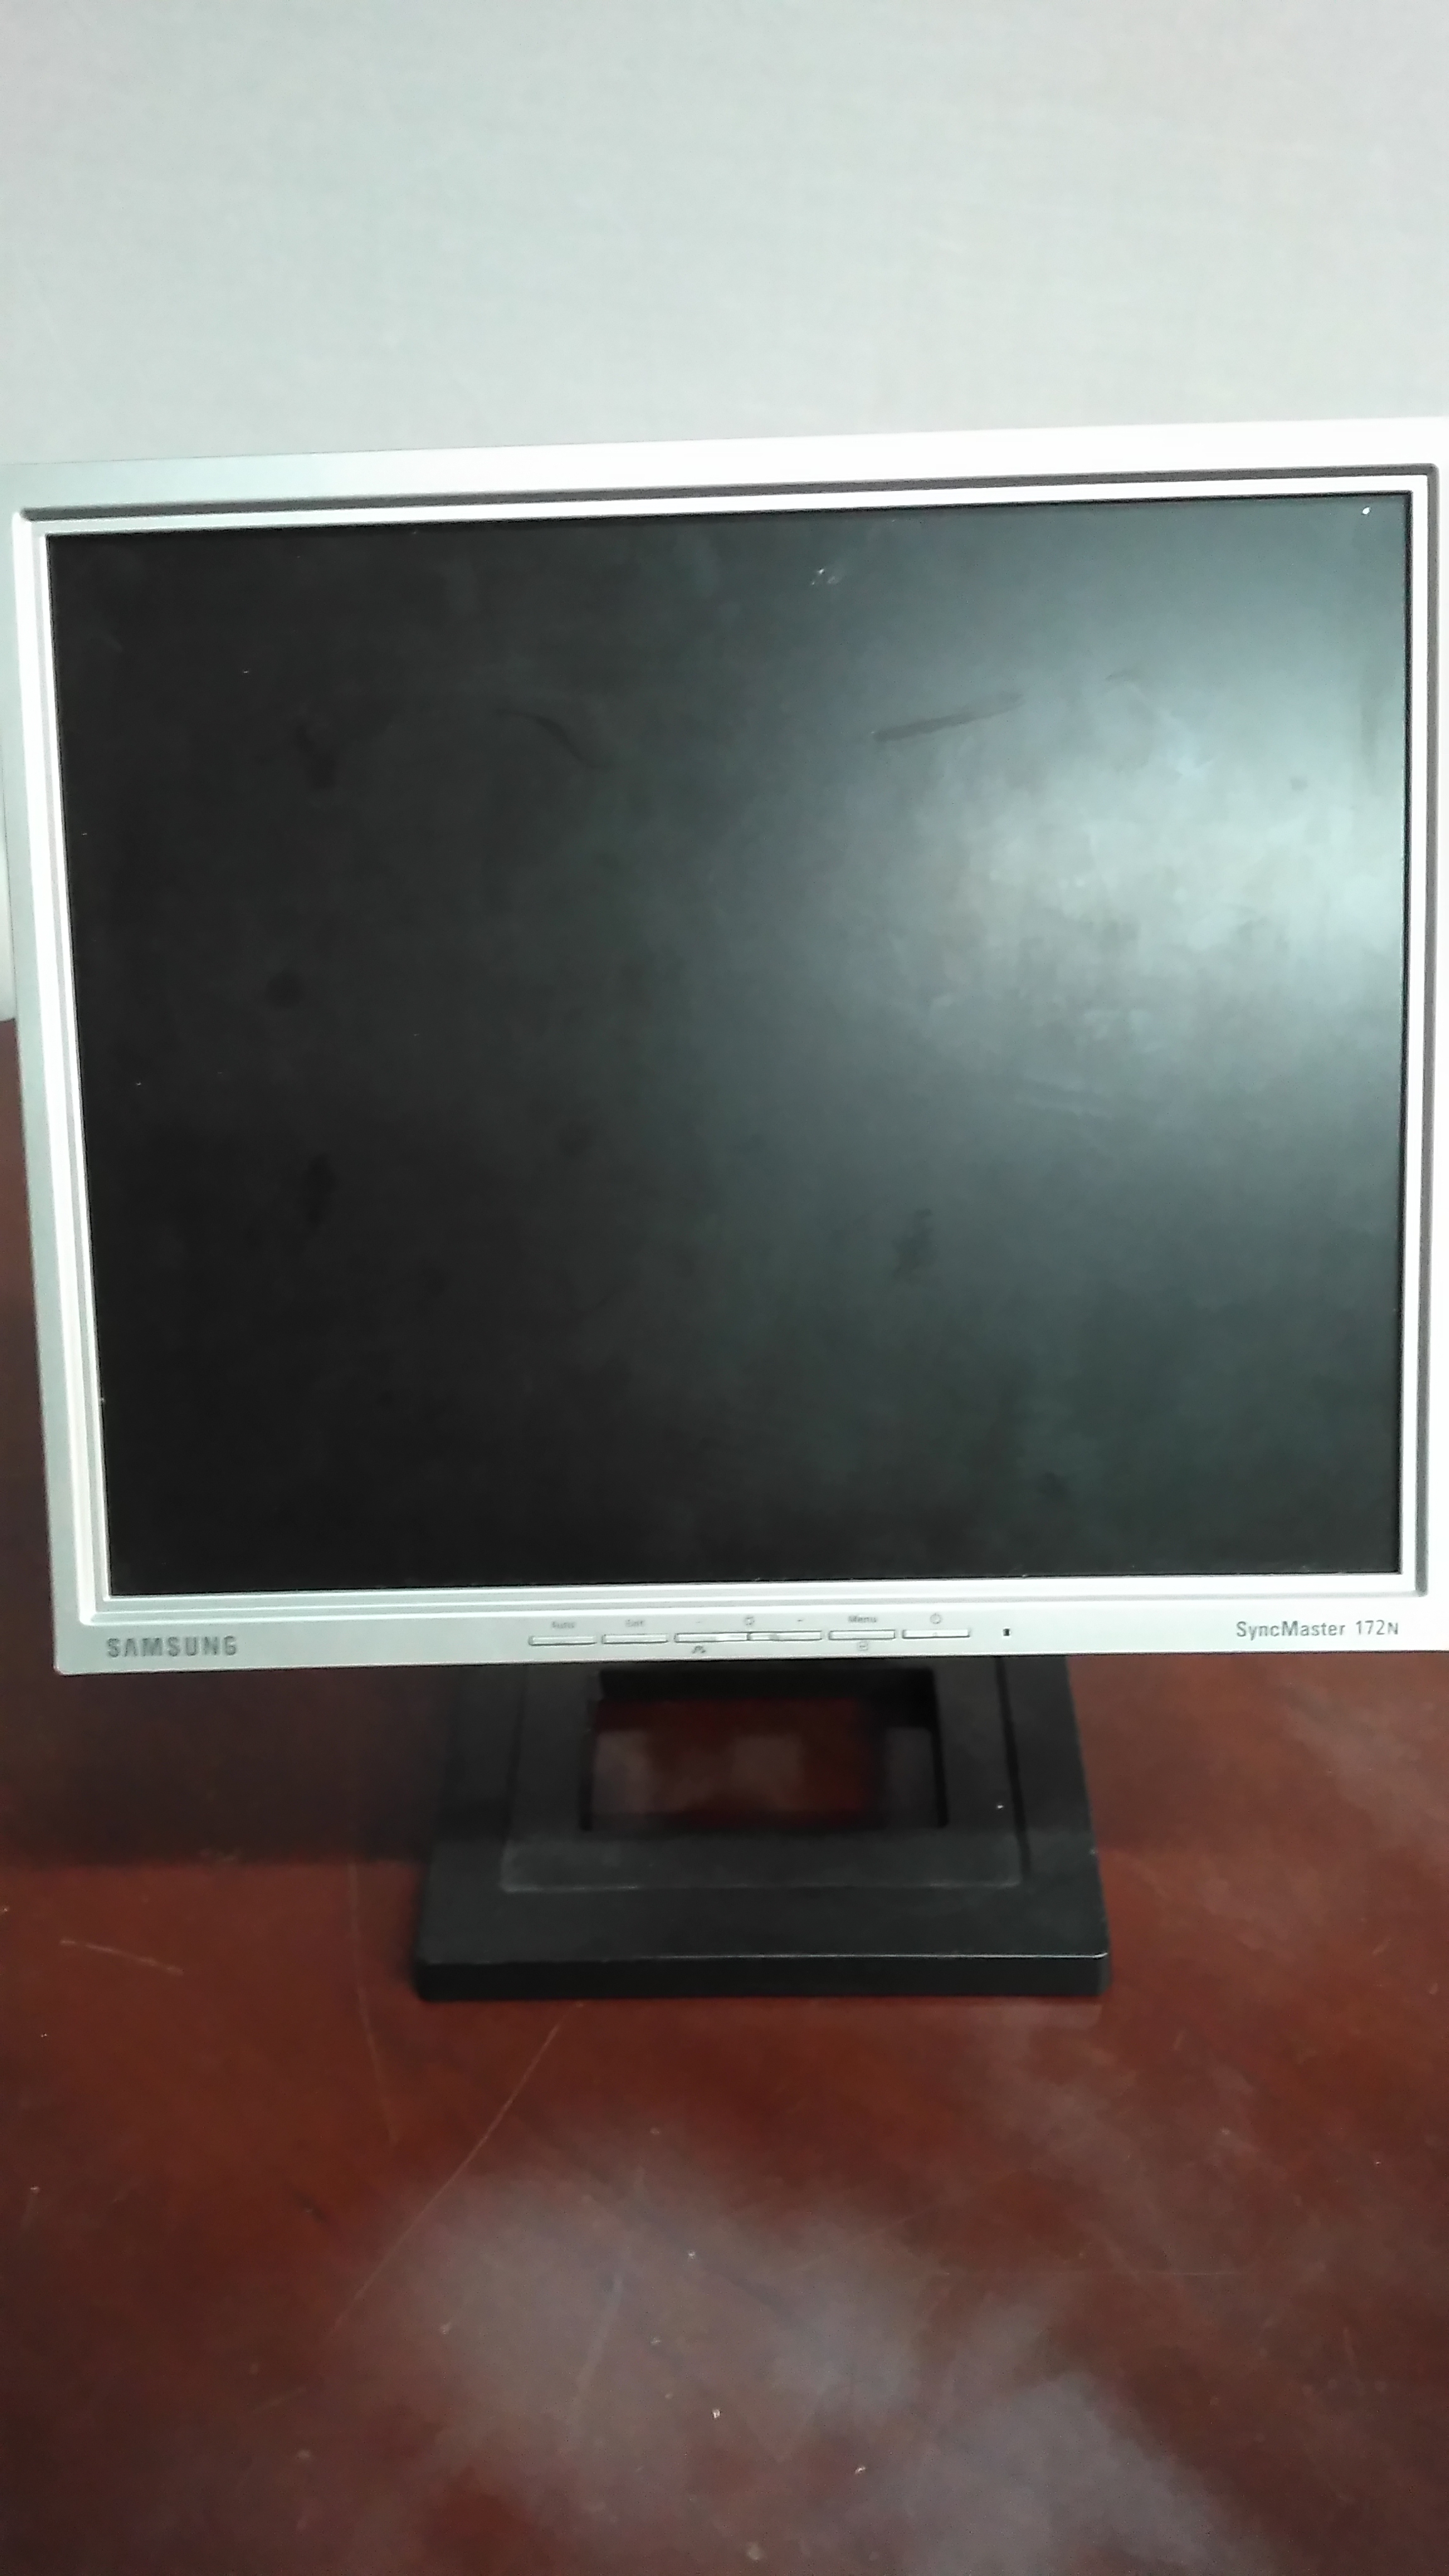 Samsung Syncmaster 17" LCD Monitor